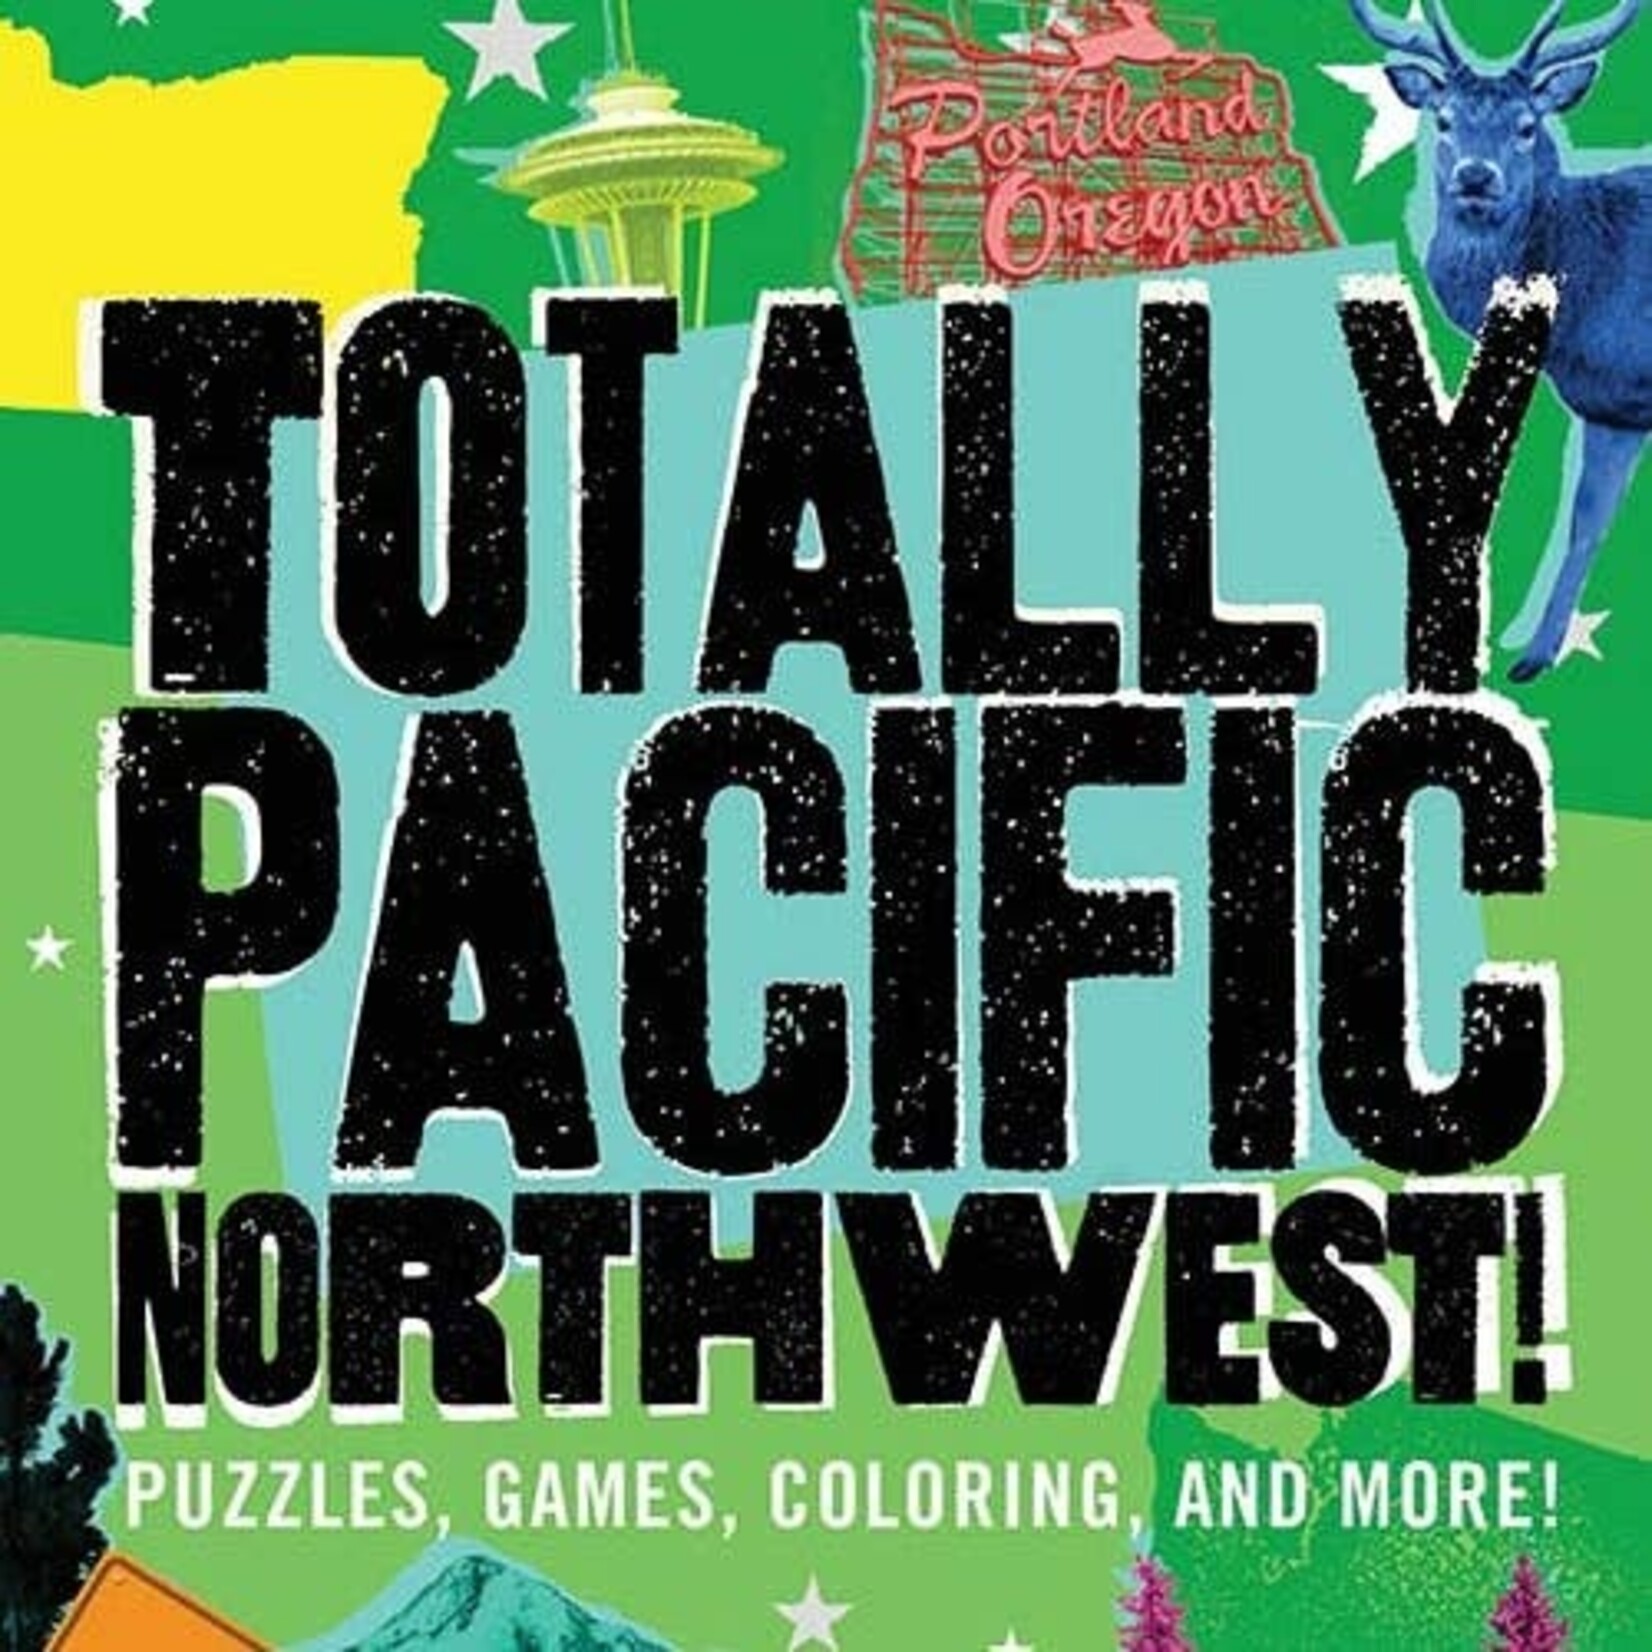 Books - Portland Oregon Totally Pacific Northwest!